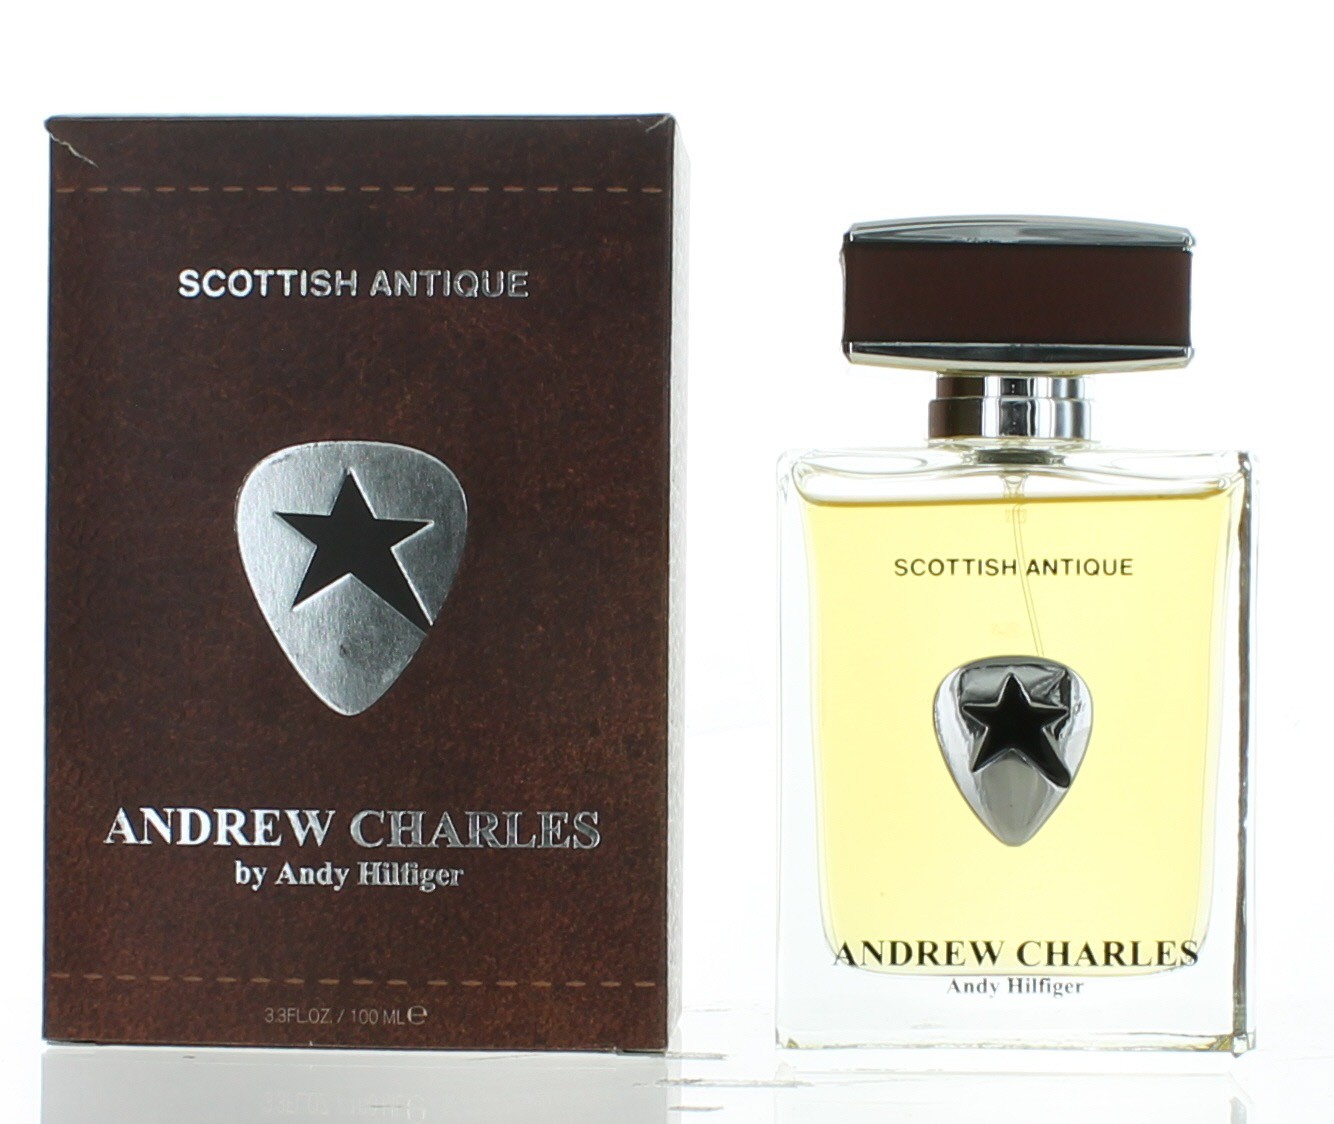 Andrew Charles Scottish Antique by Andy Hilfiger 3.3 oz Eau De Toilette Spray for Men